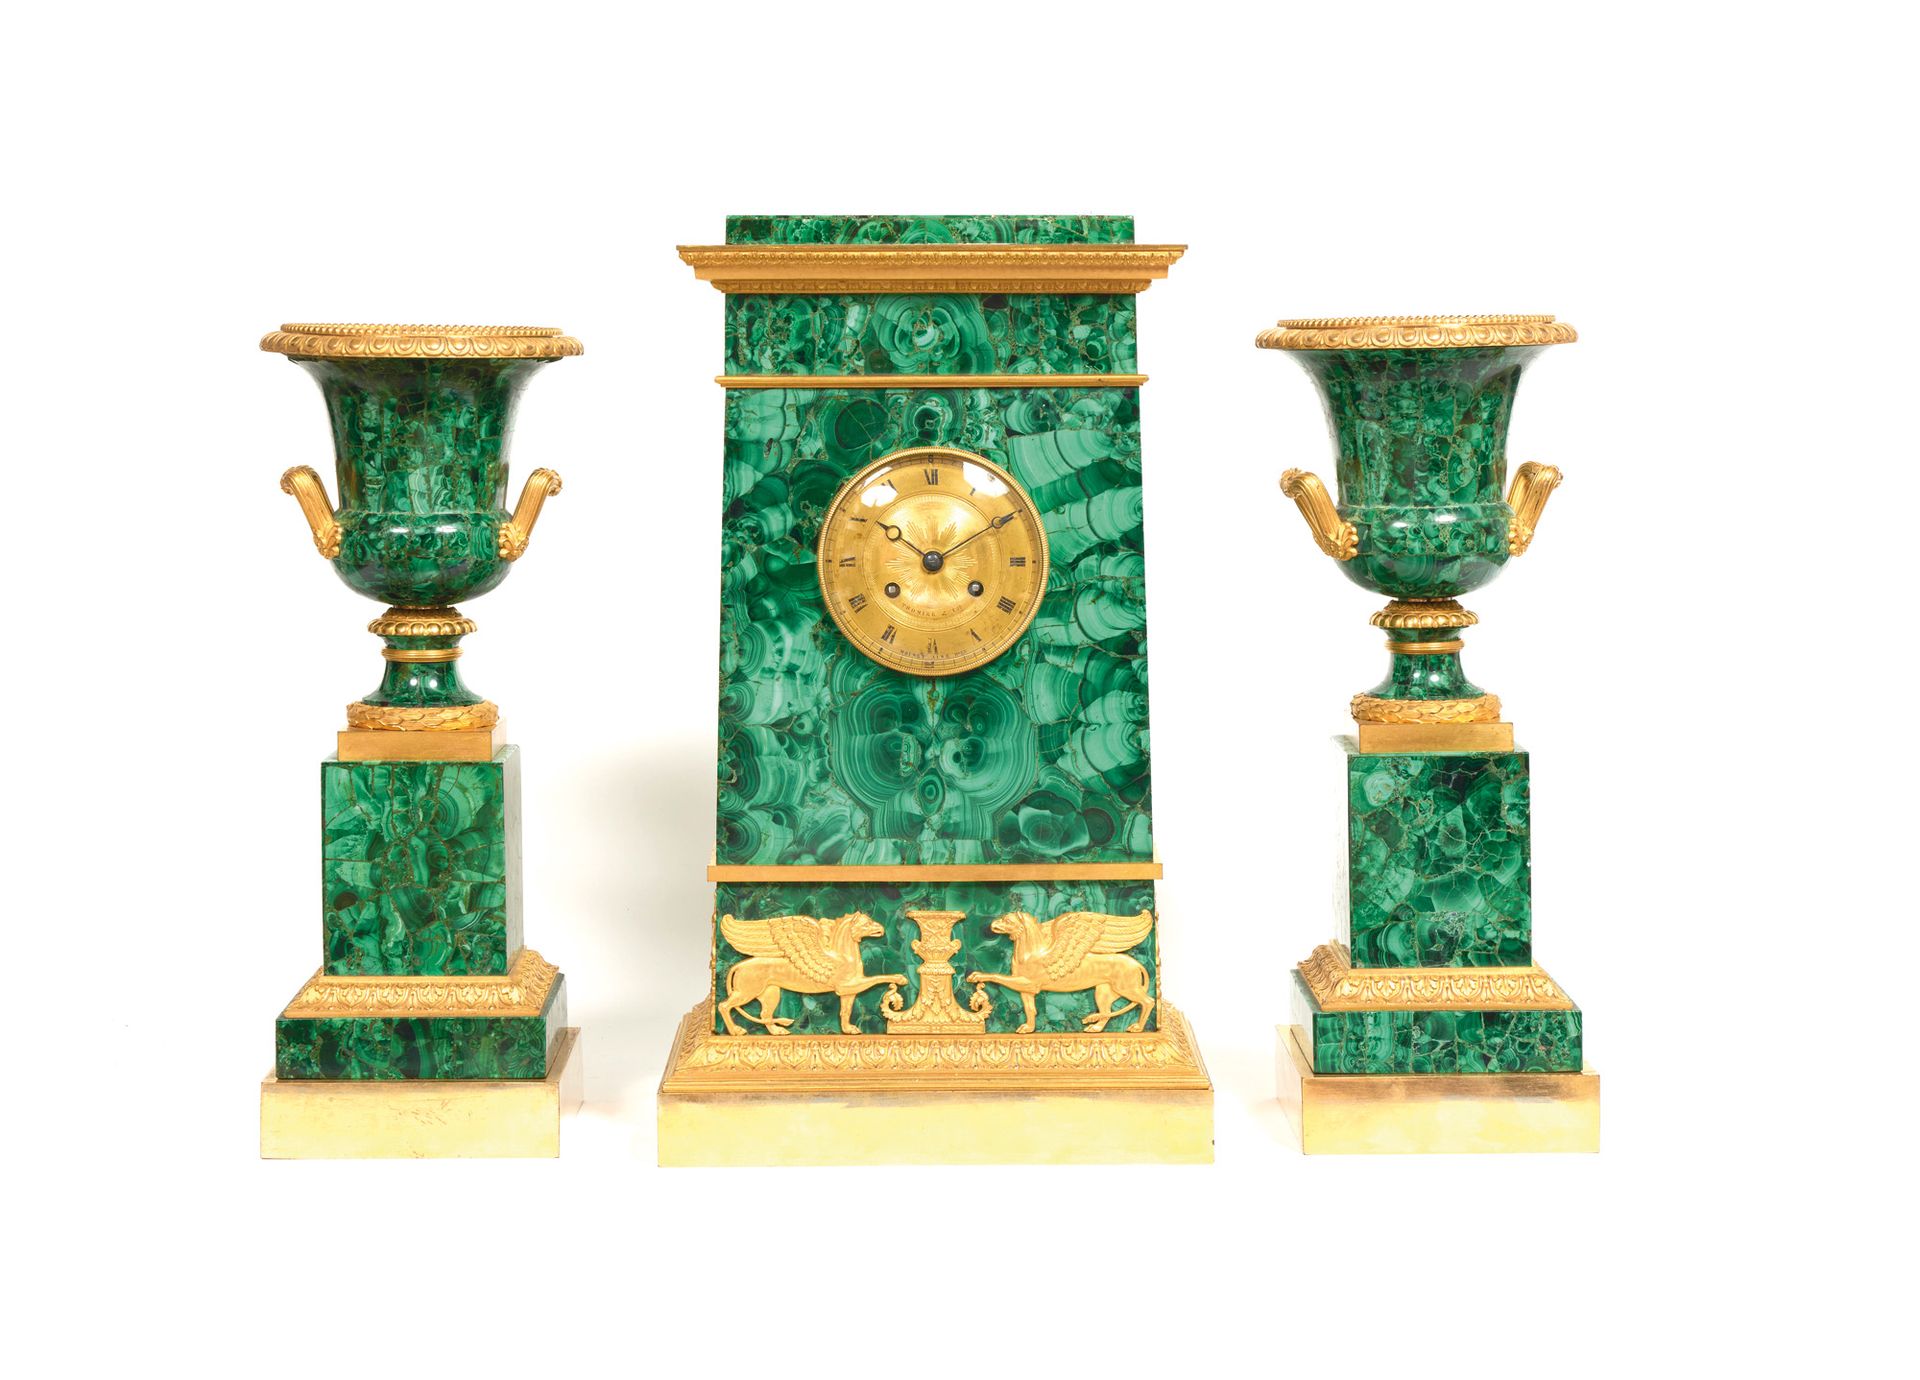 Garniture de cheminée comprenant : 这幅作品在2015年被列为国宝，因此不能离开法国领土。 

壁炉架包括： 

A.钟表 
&hellip;